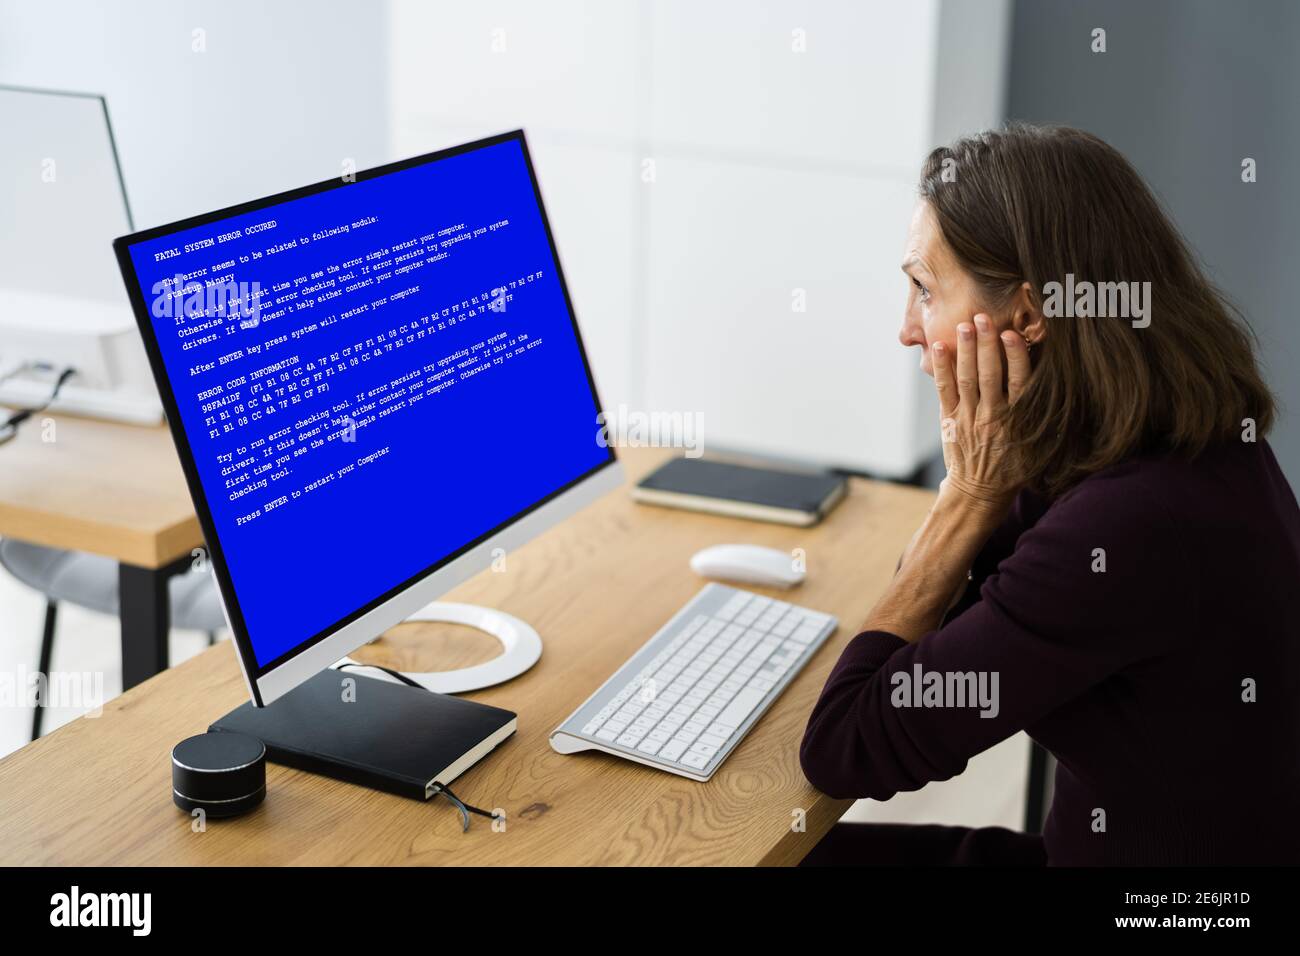 Erreur BSOD bleue sur l'ordinateur. Attaque de programmes malveillants Banque D'Images